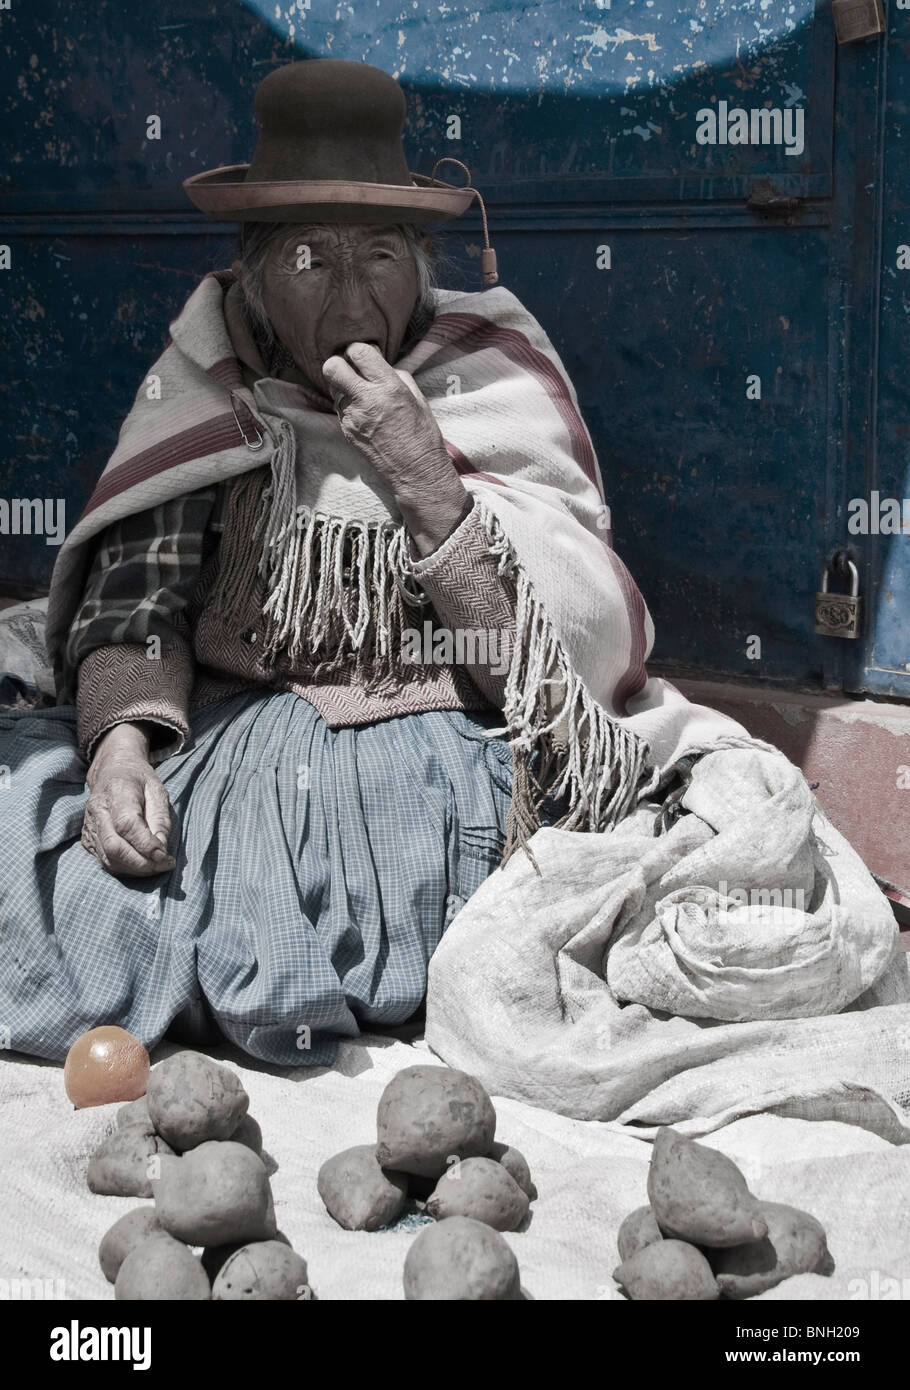 Woman Selling oranges, Lamay, Peru Stock Photo